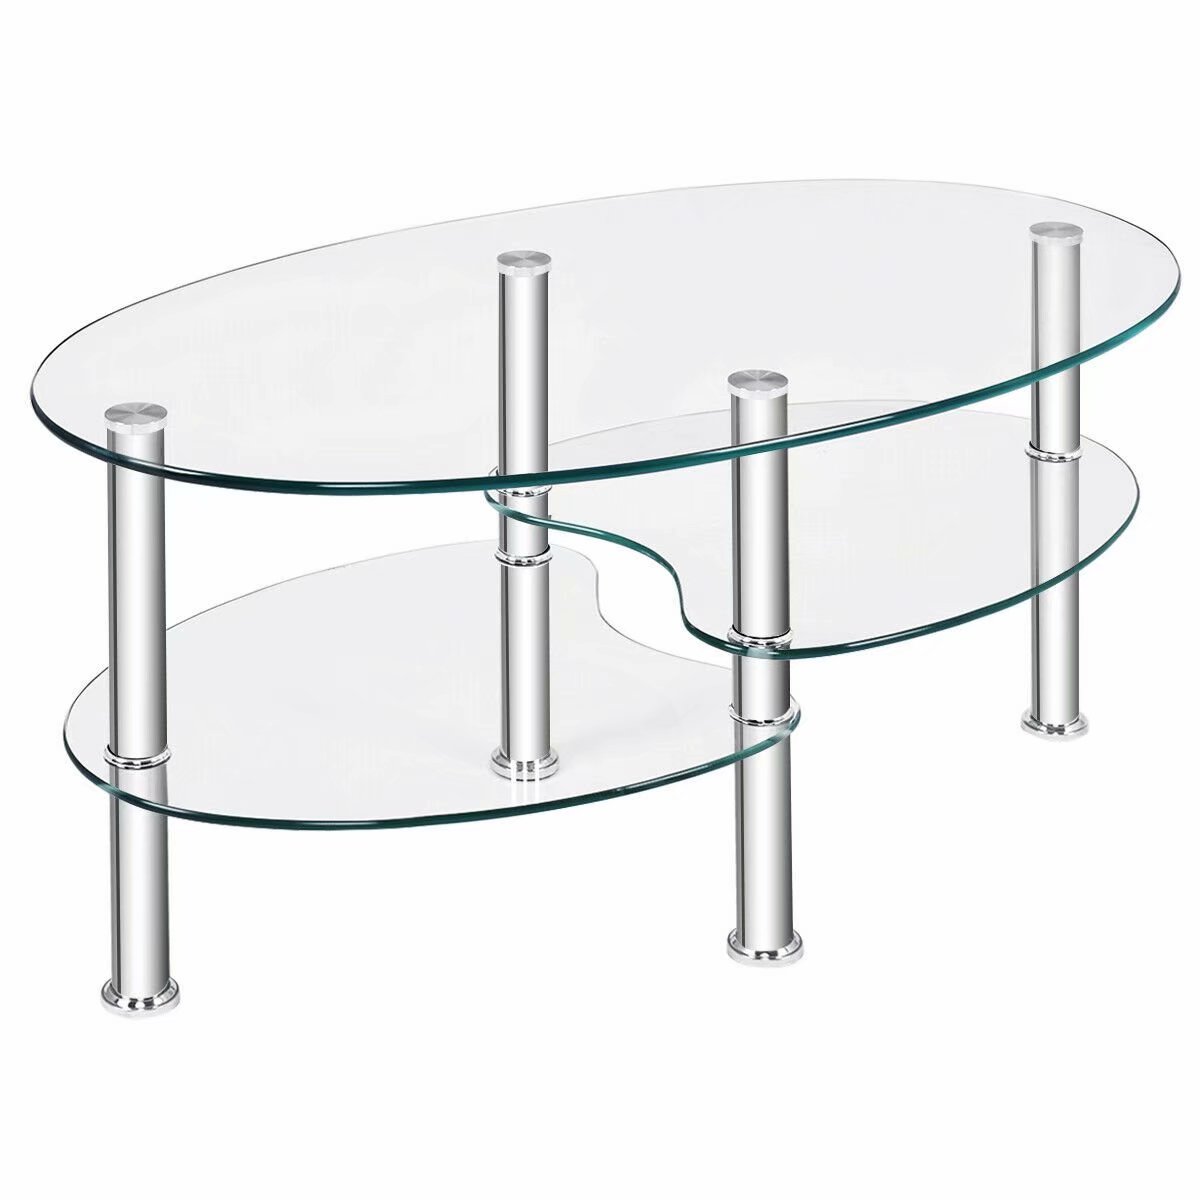 Tempered Glass Oval Side Coffee Table Shelf Chrome Base Living Room Clear